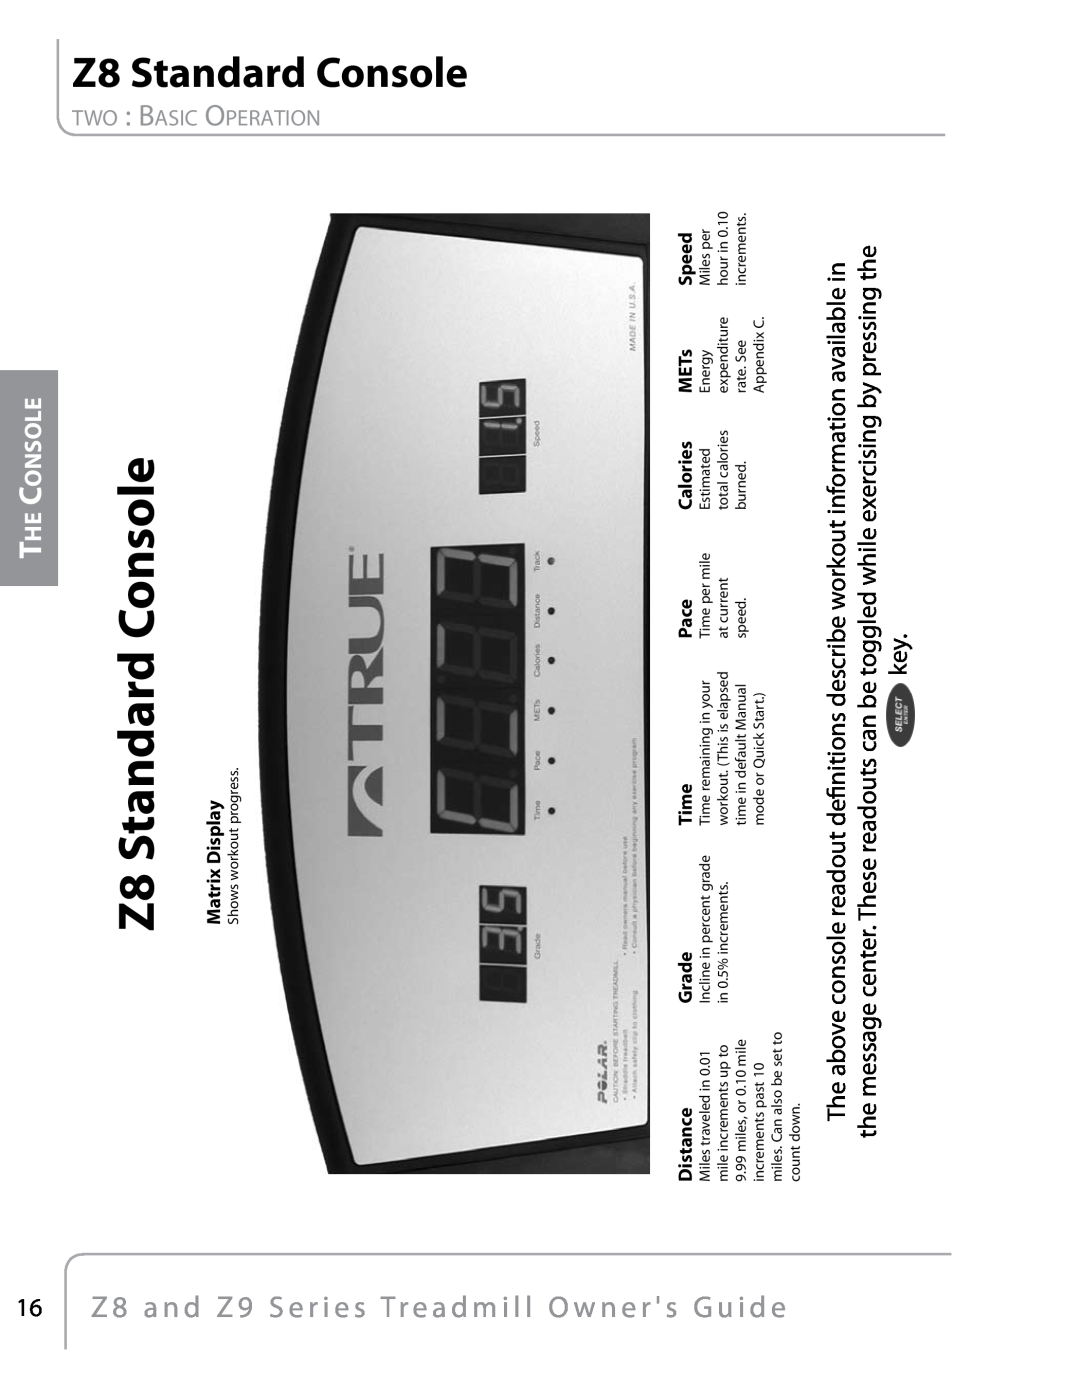 True Fitness Z9 Z8 Standard Console, 16 Z 8 a n d Z 9 S e r i e s Tr e a d m i l l O w n e r s G u i d e, The Console 